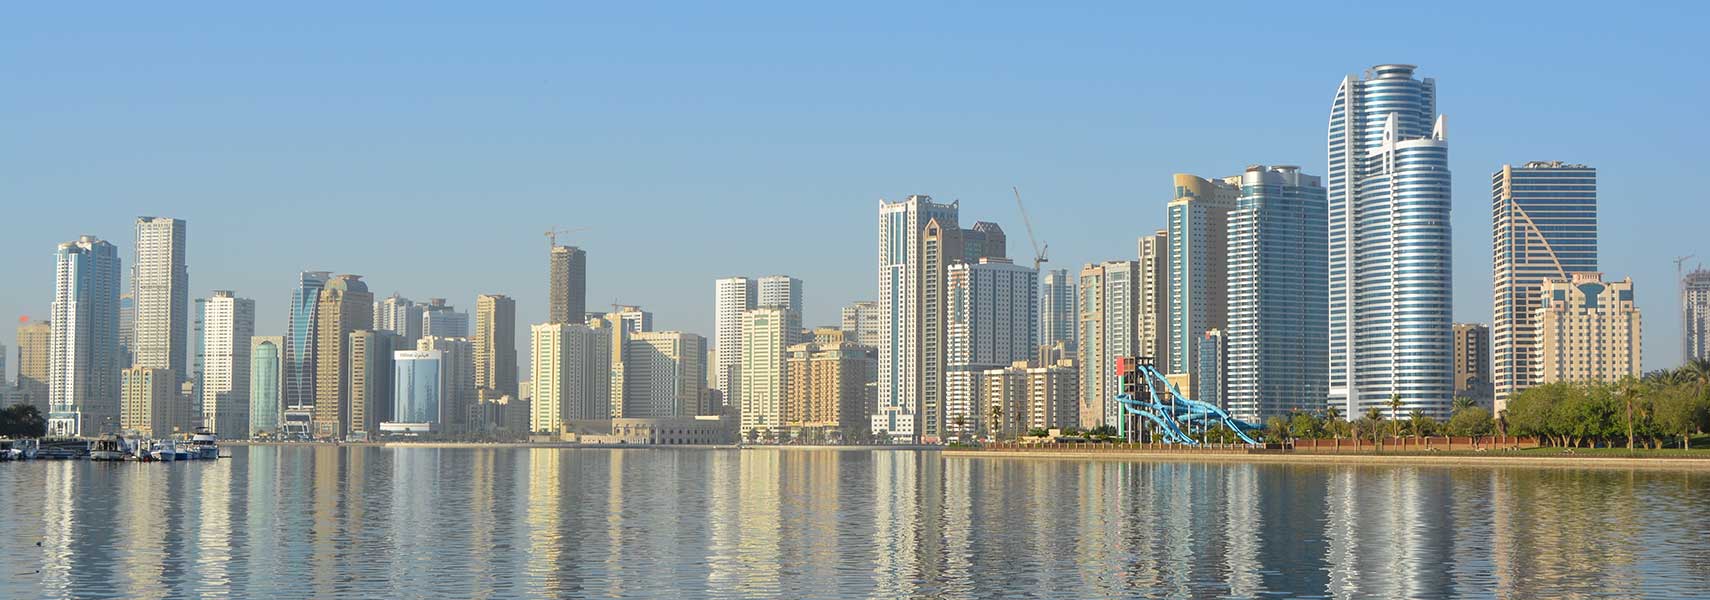 Sharjah city skyline, United Arab Emirates